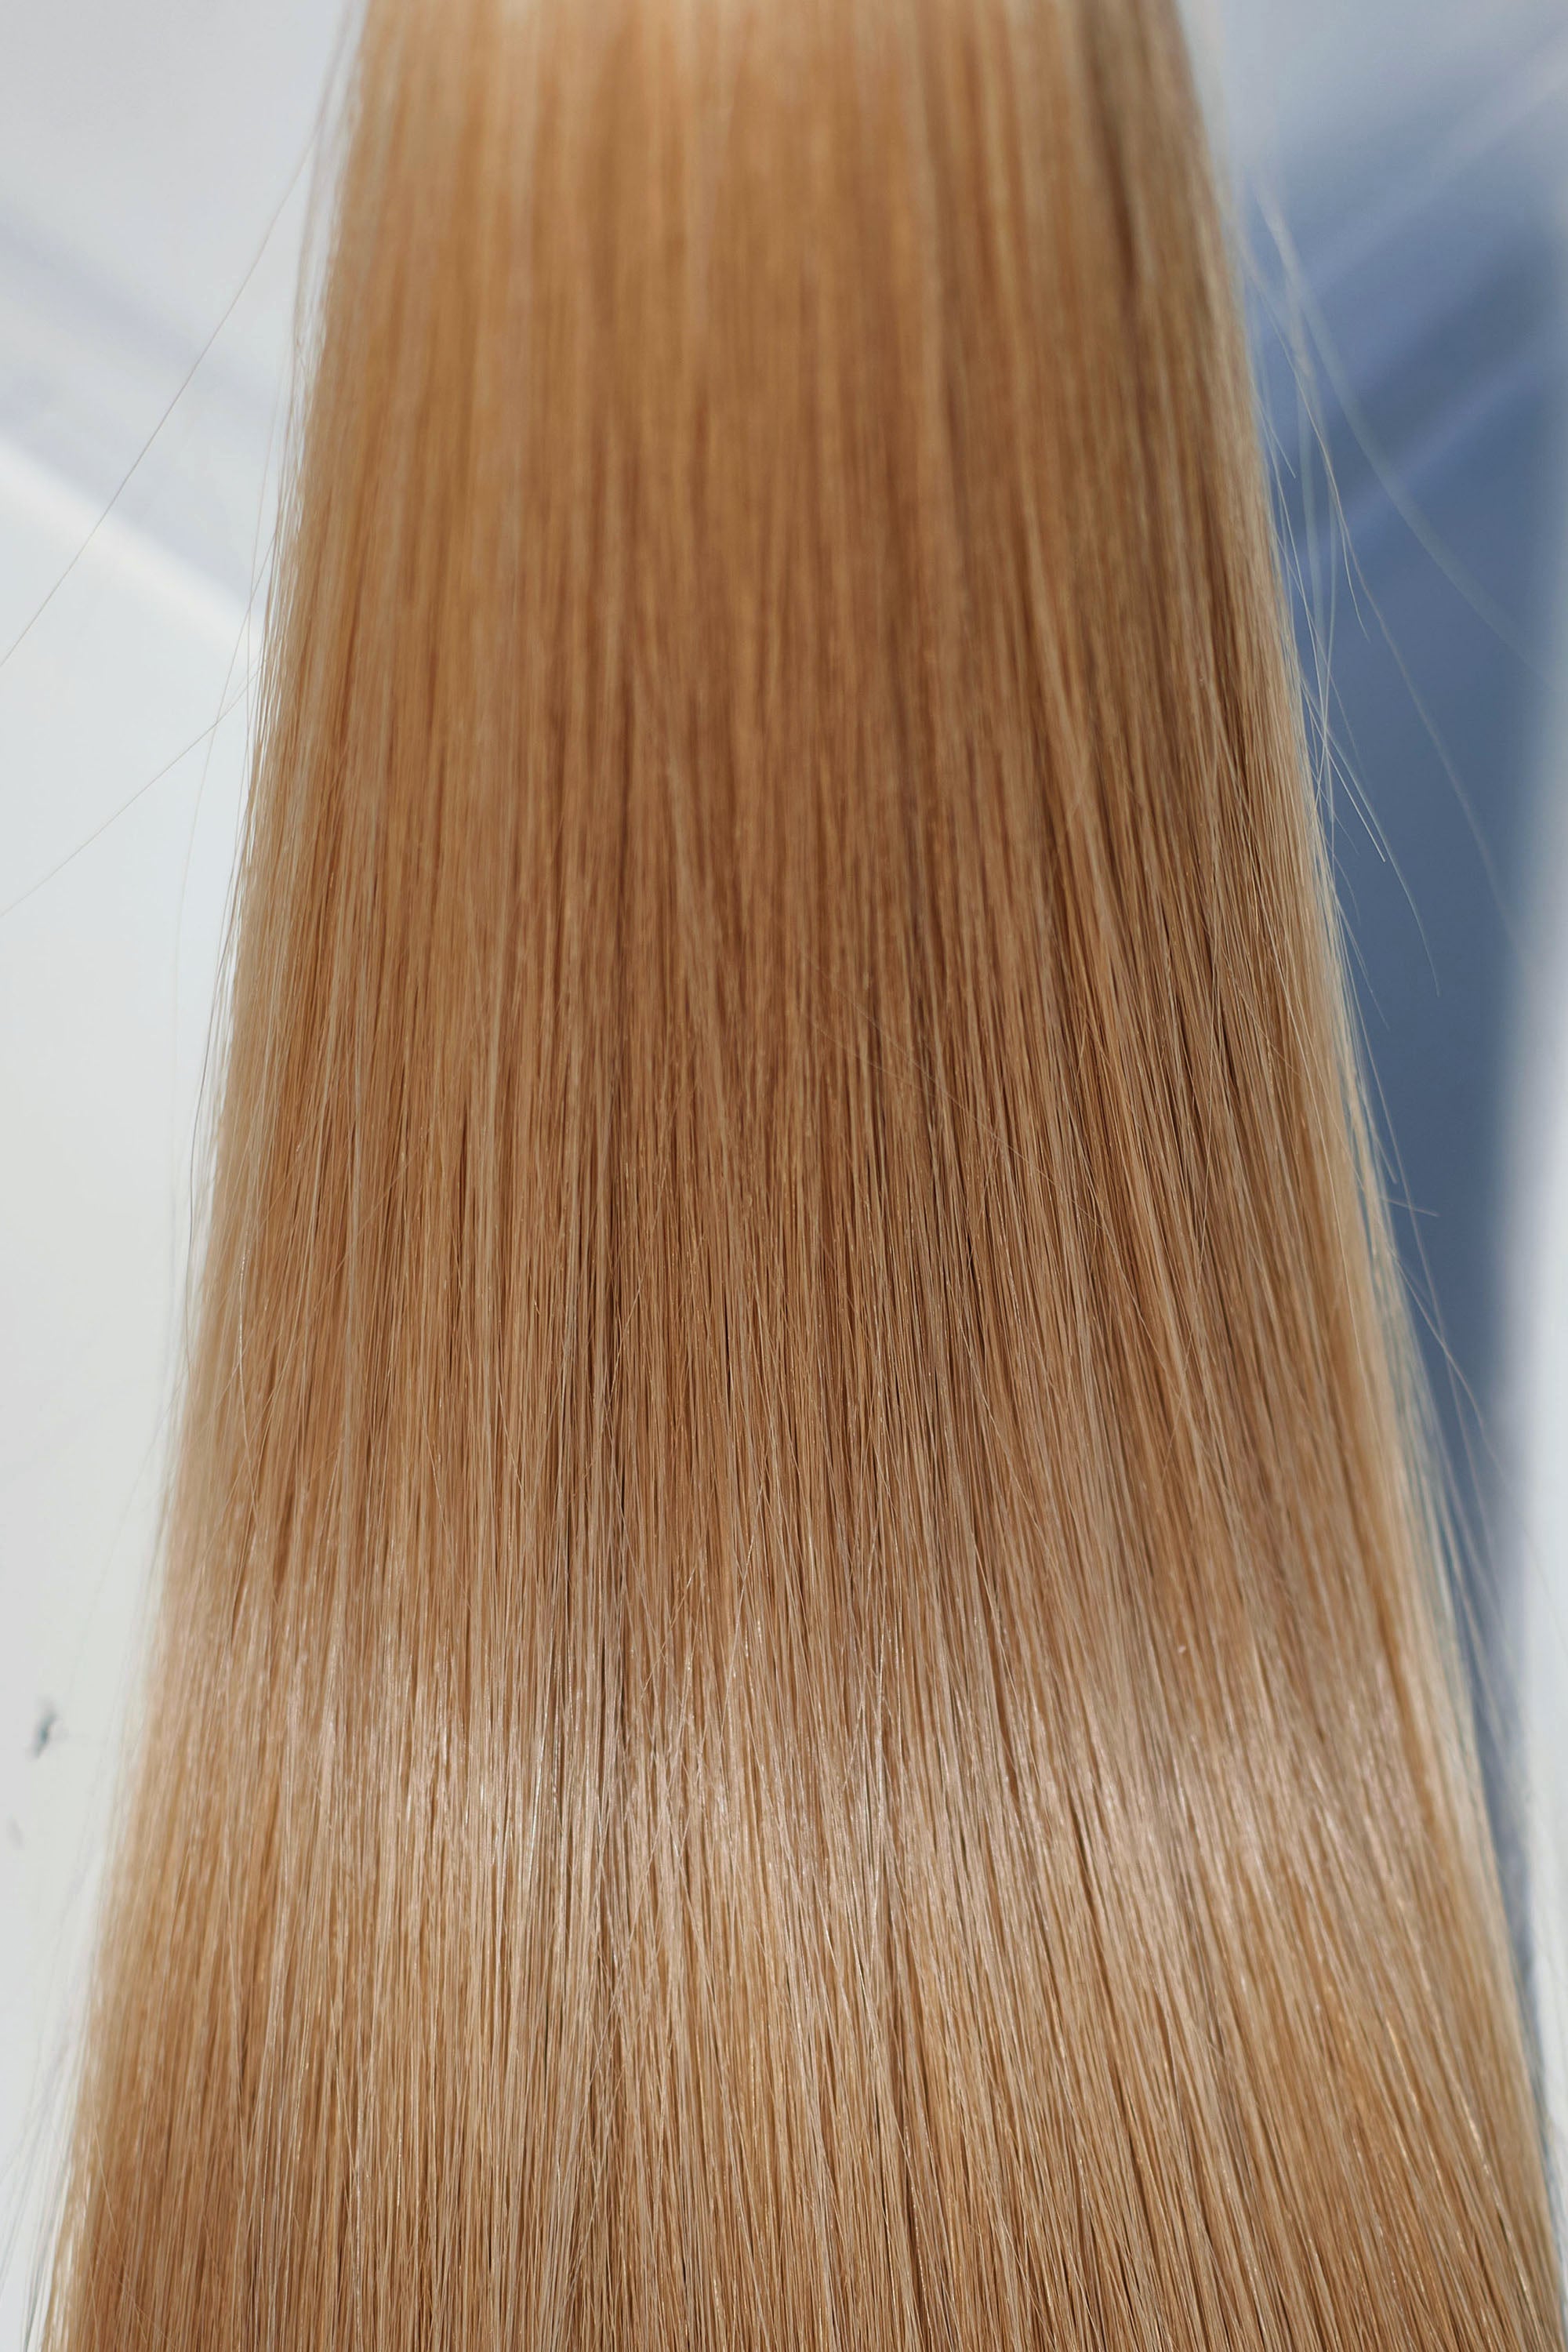 Behair professional Keratin Tip "Premium" 22" (55cm) Natural Straight Gold Sand #18 - 25g (Standart - 0.7g each pcs) hair extensions